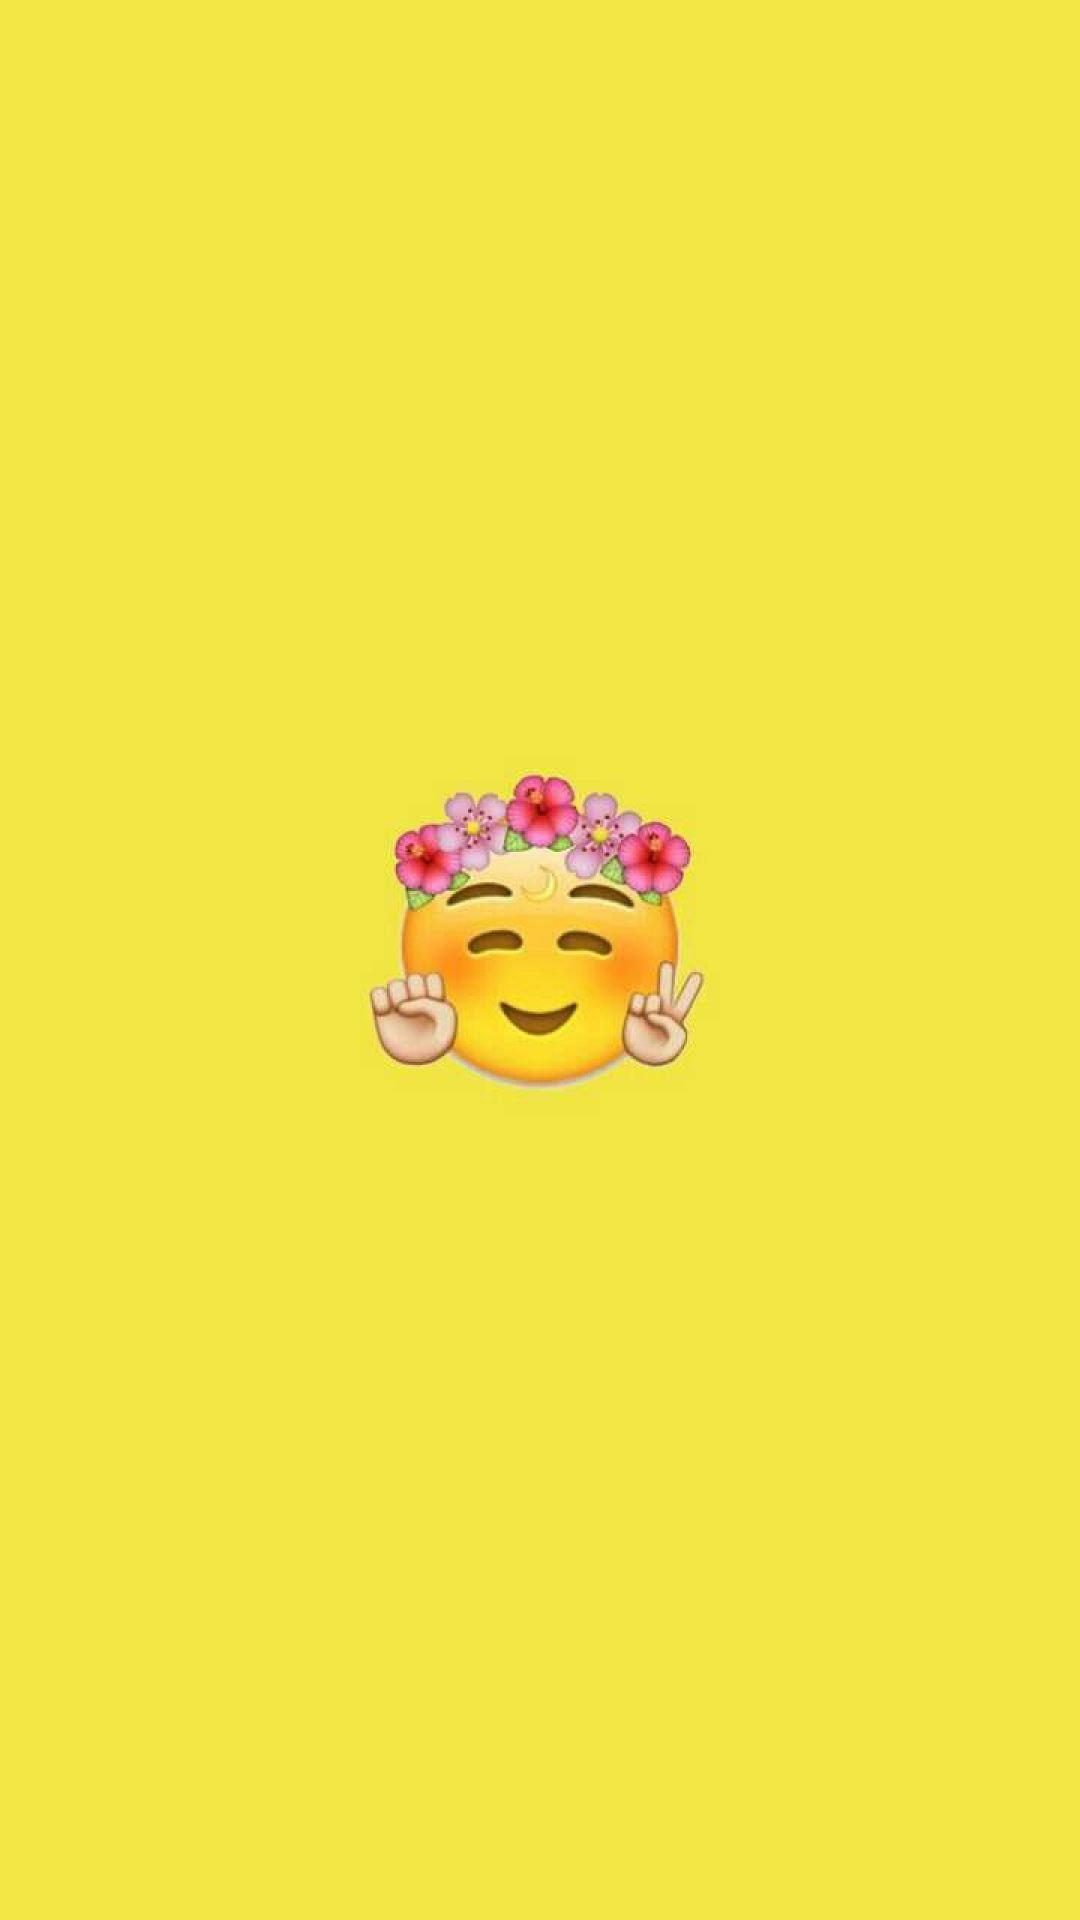 A yellow background with an emoji wearing flowers - Emoji